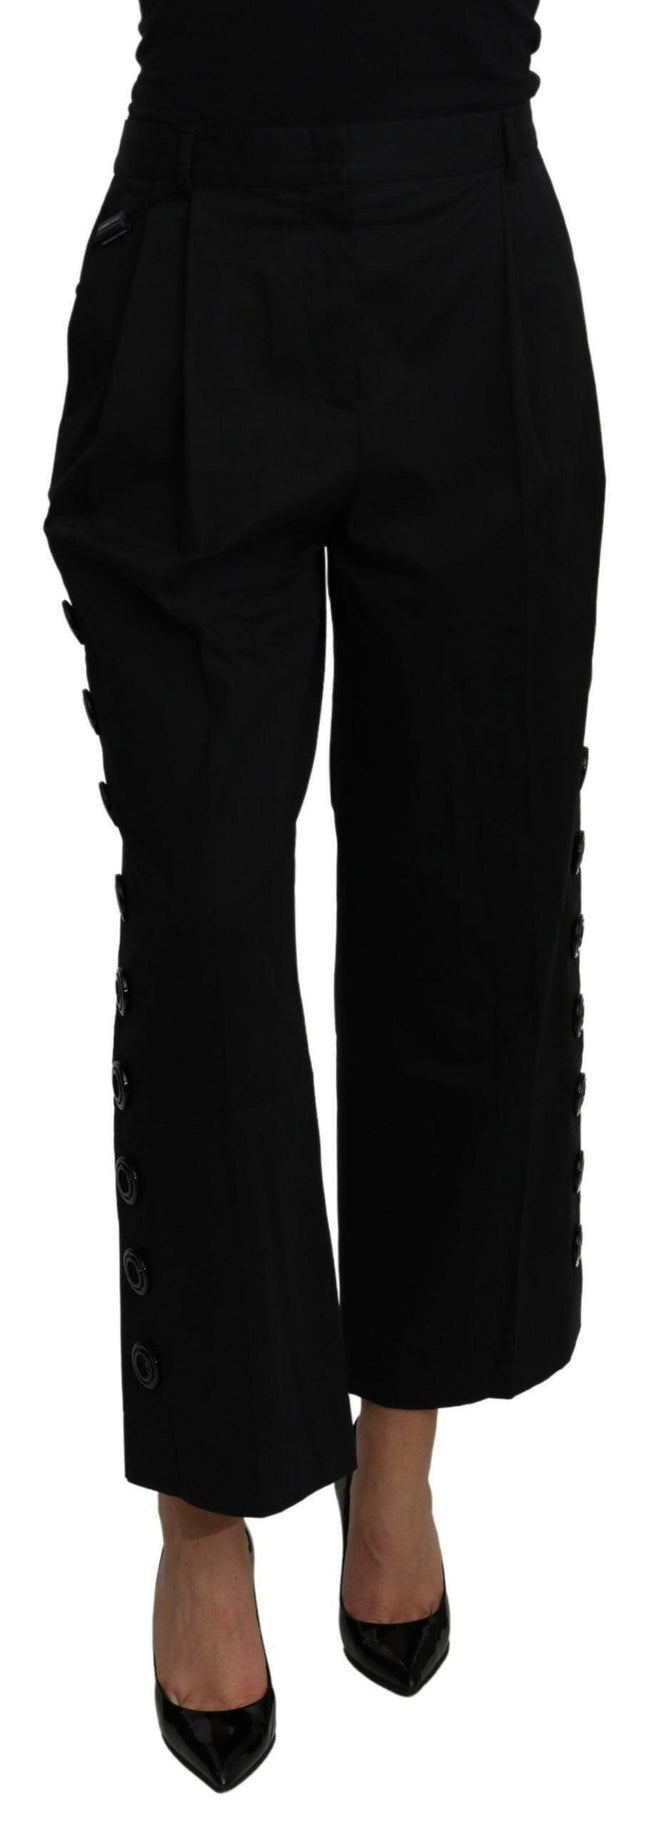 Dolce & Gabbana Black High Waist Cropped Cotton Stretch Pants - GENUINE AUTHENTIC BRAND LLC  